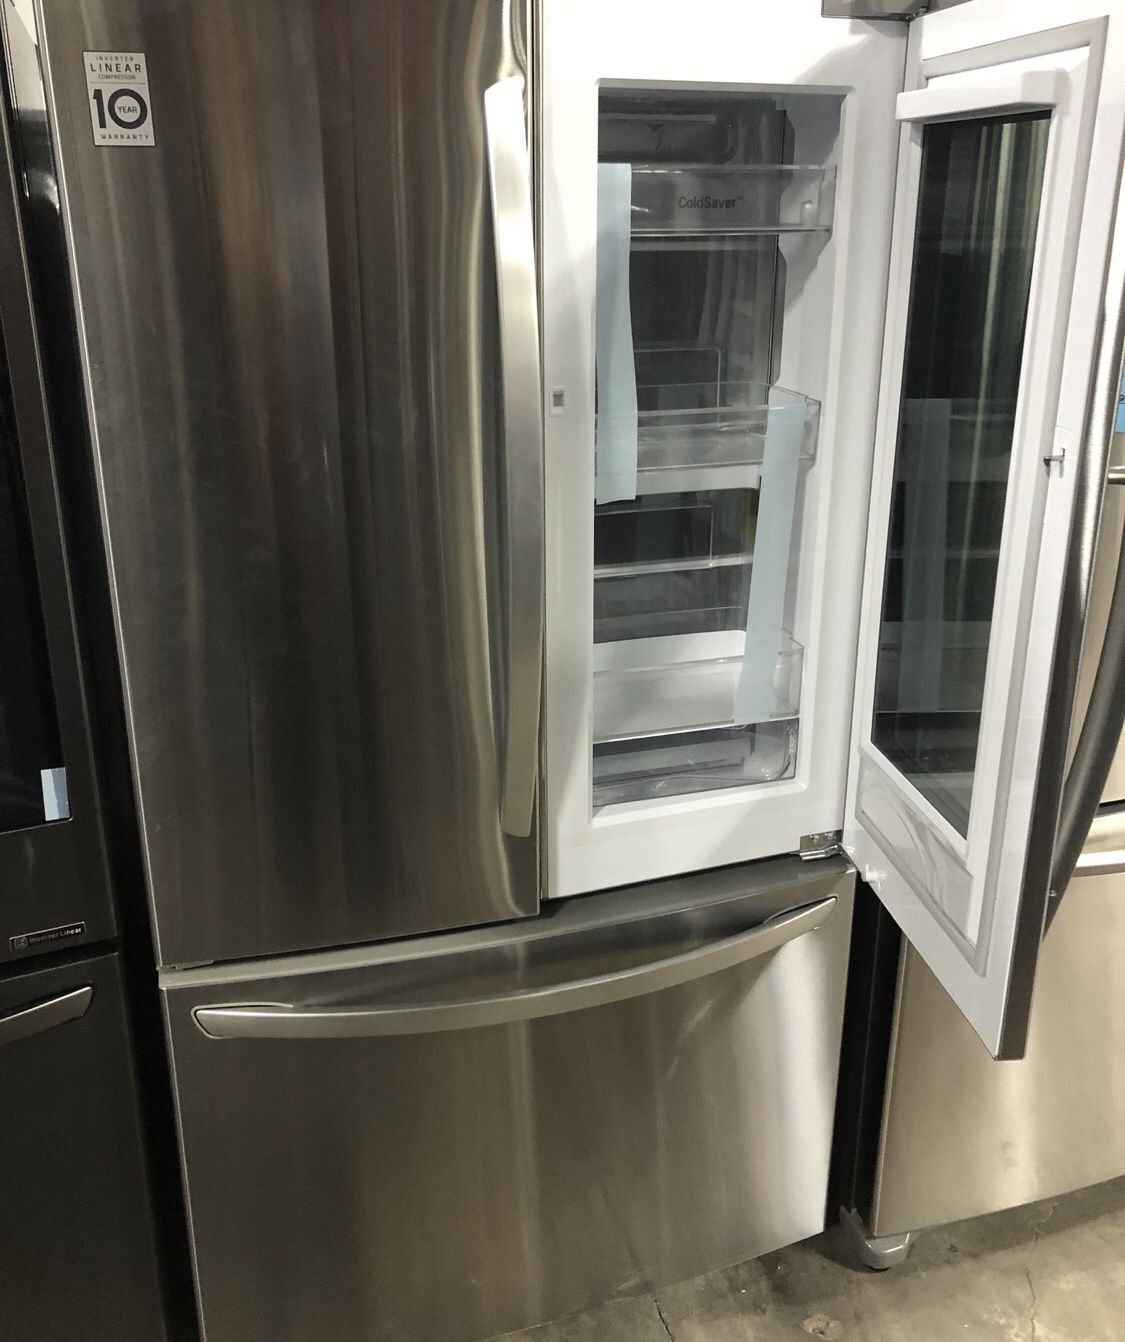 Brand new LG insta view 27 cu ft refrigerator